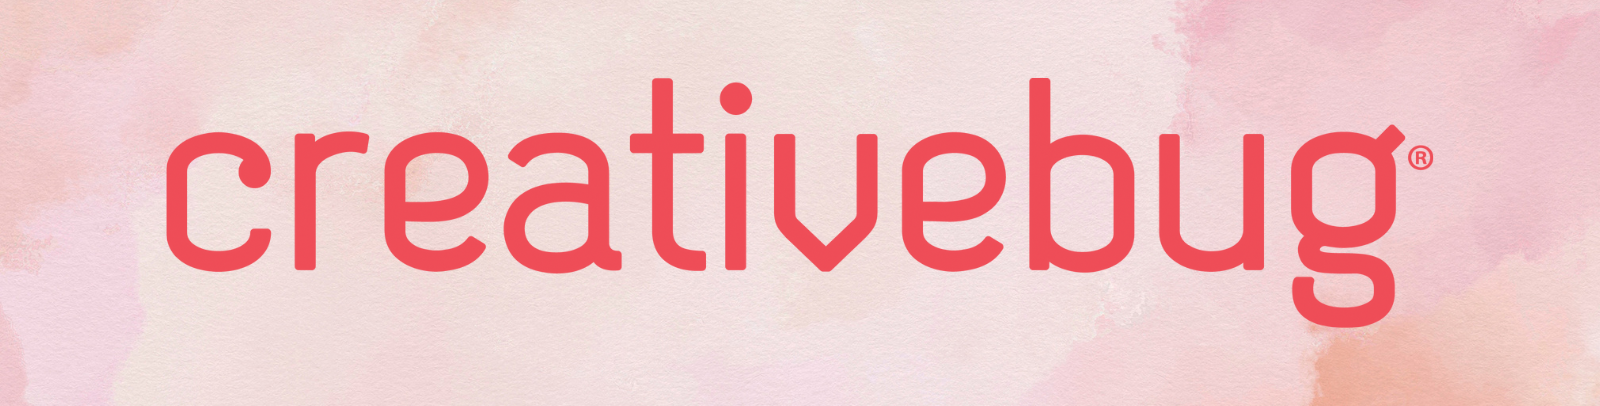 Creativebug logo with pink watercolor background.